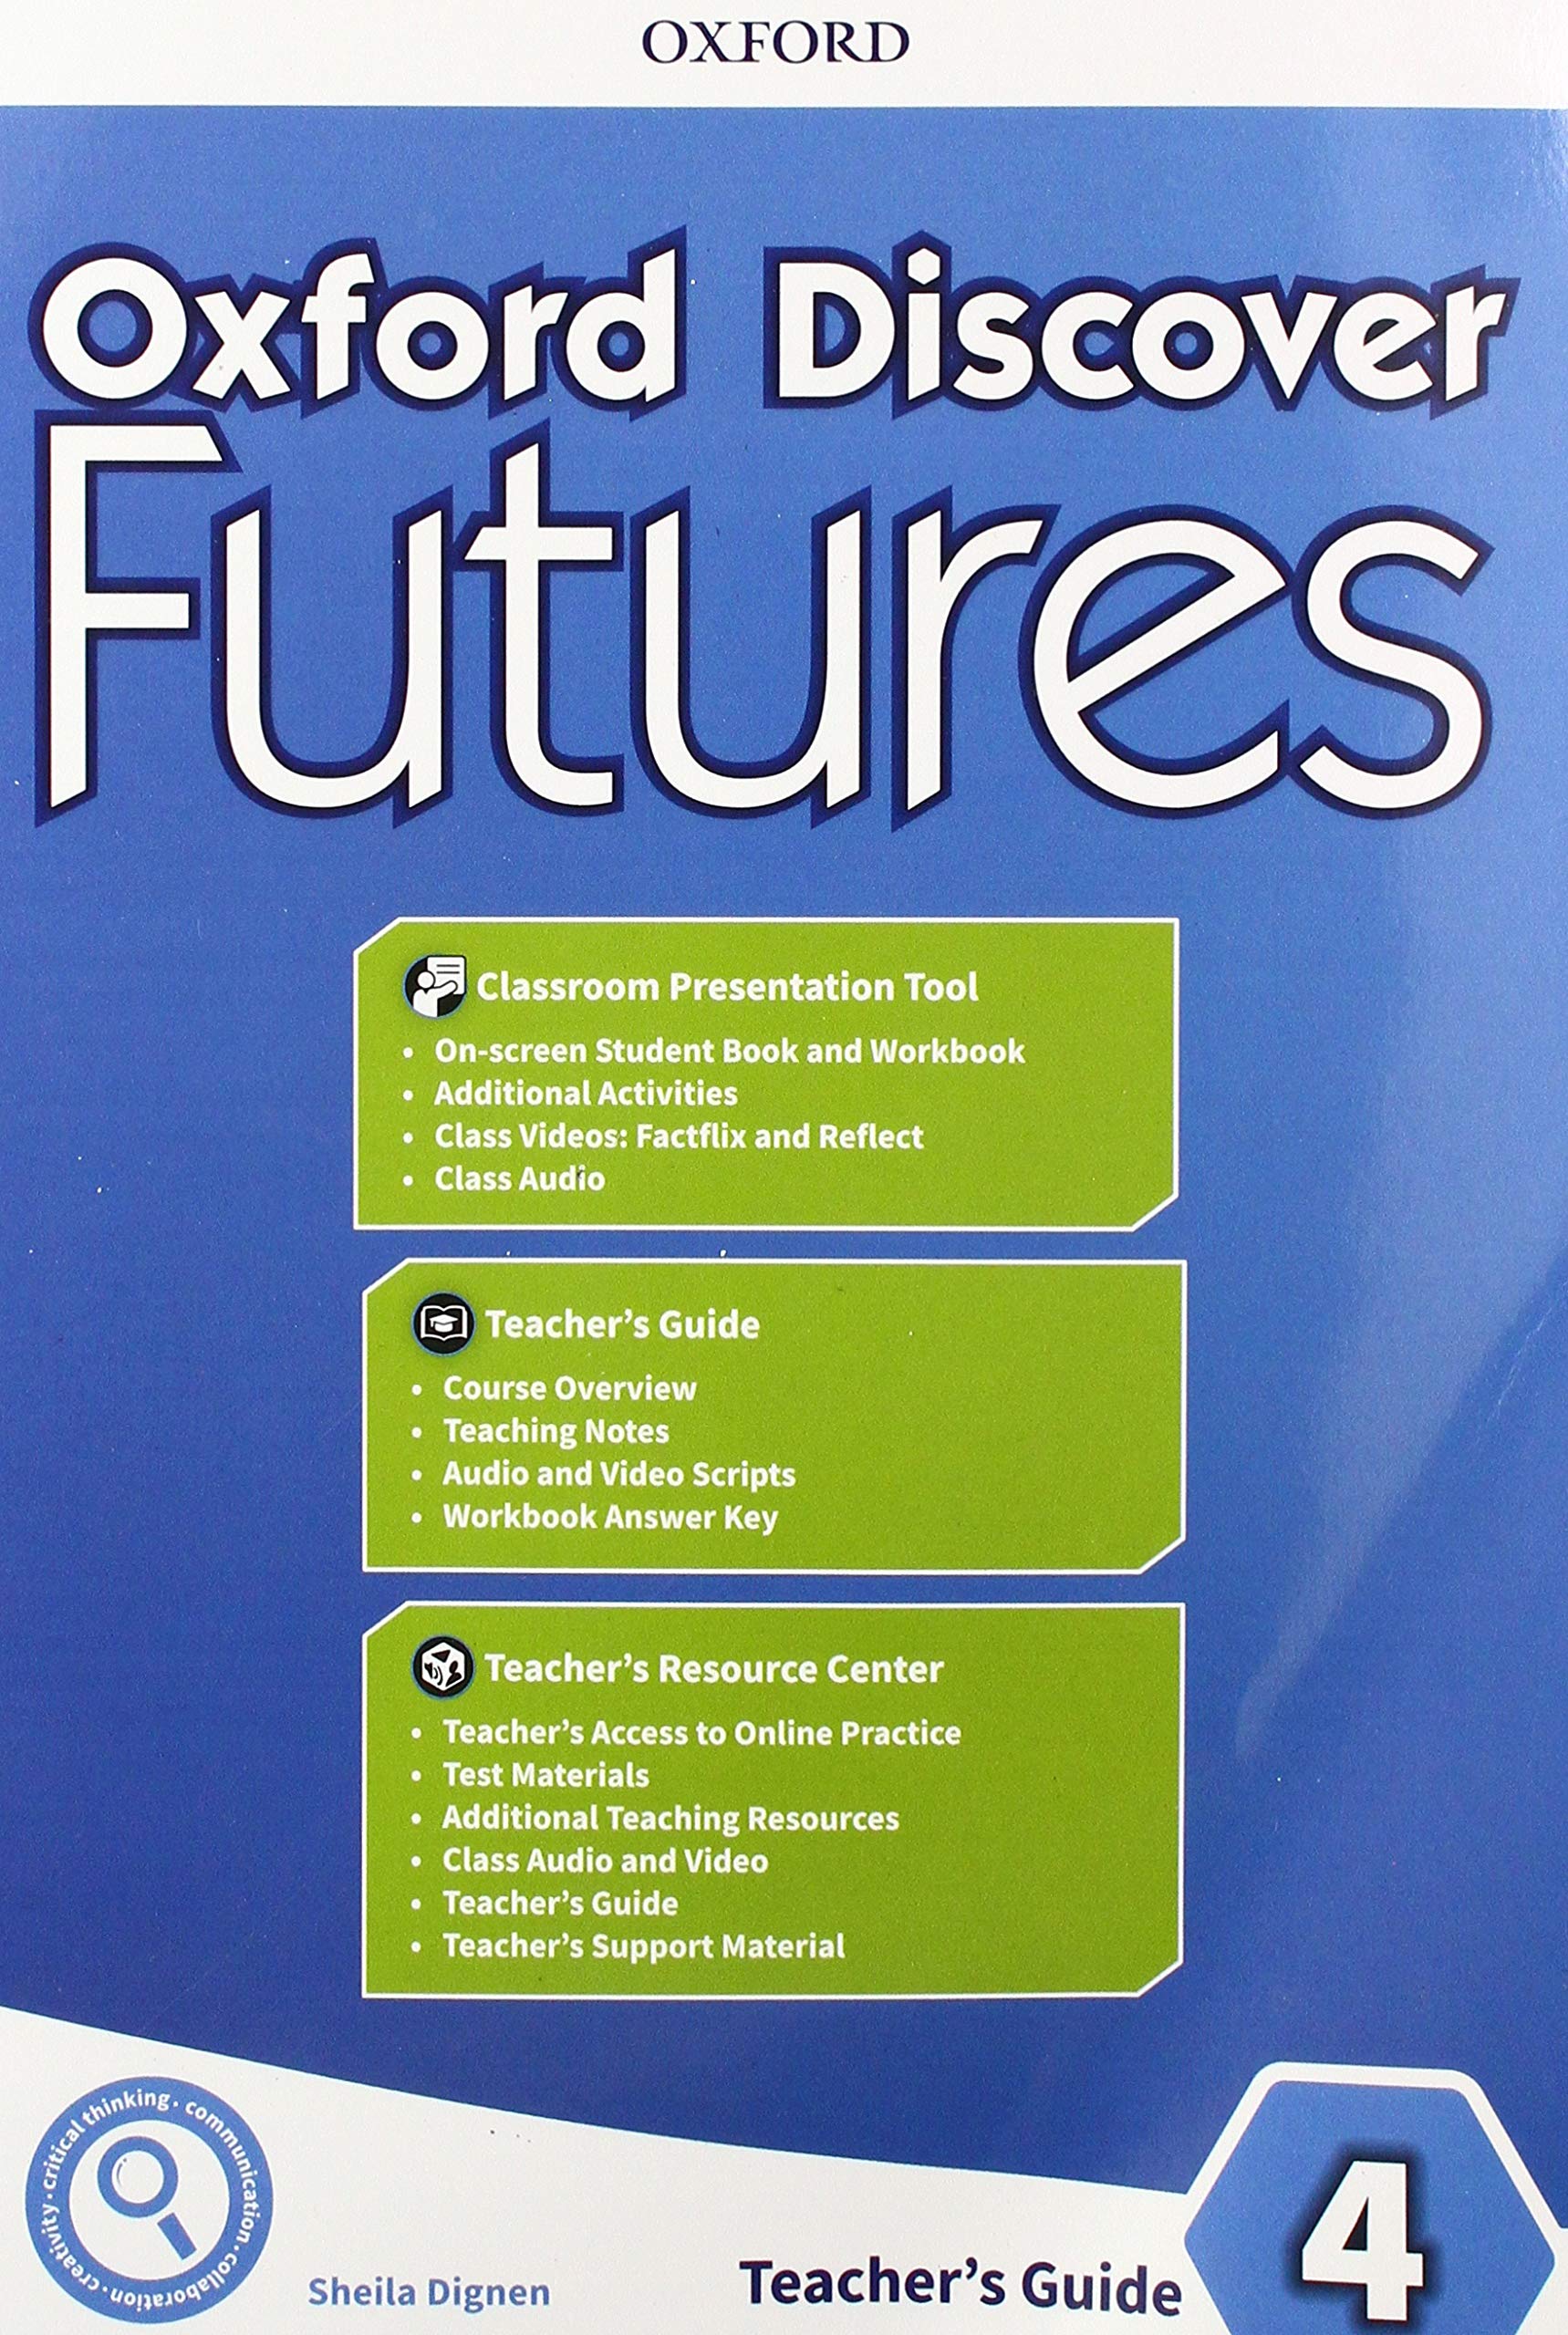 Oxford discover book. Oxford discover Futures 4 Workbook. Oxford discover Futures. Oxford discover Futures 1. Oxford Discovery Future.